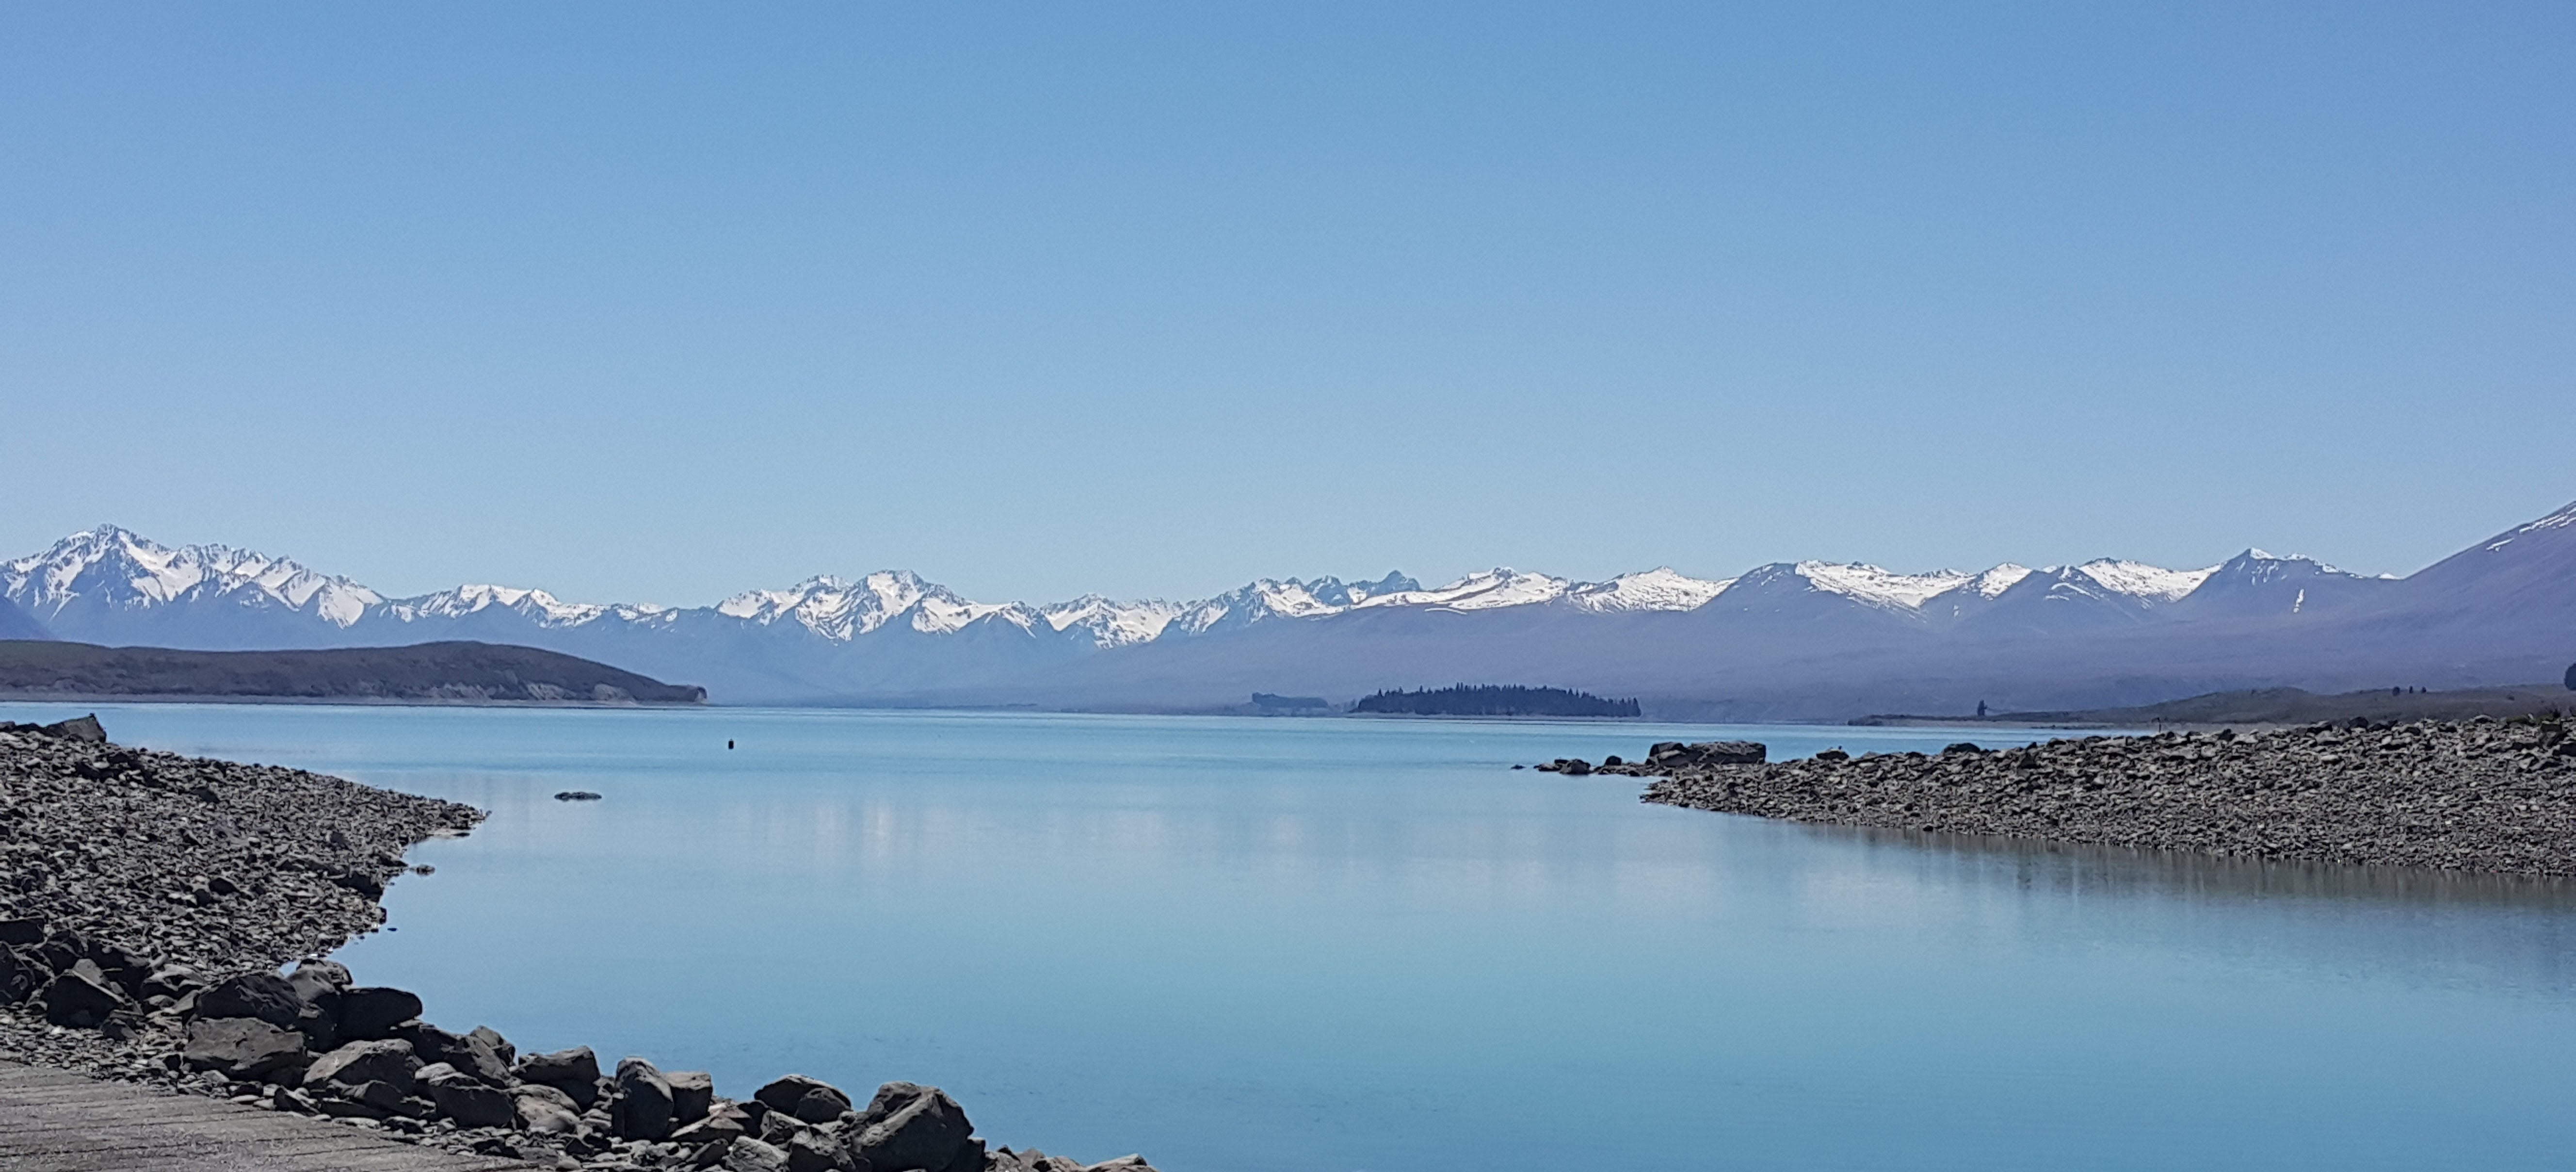 lake, tekapo, newzealand, water, mountain, scenics - nature